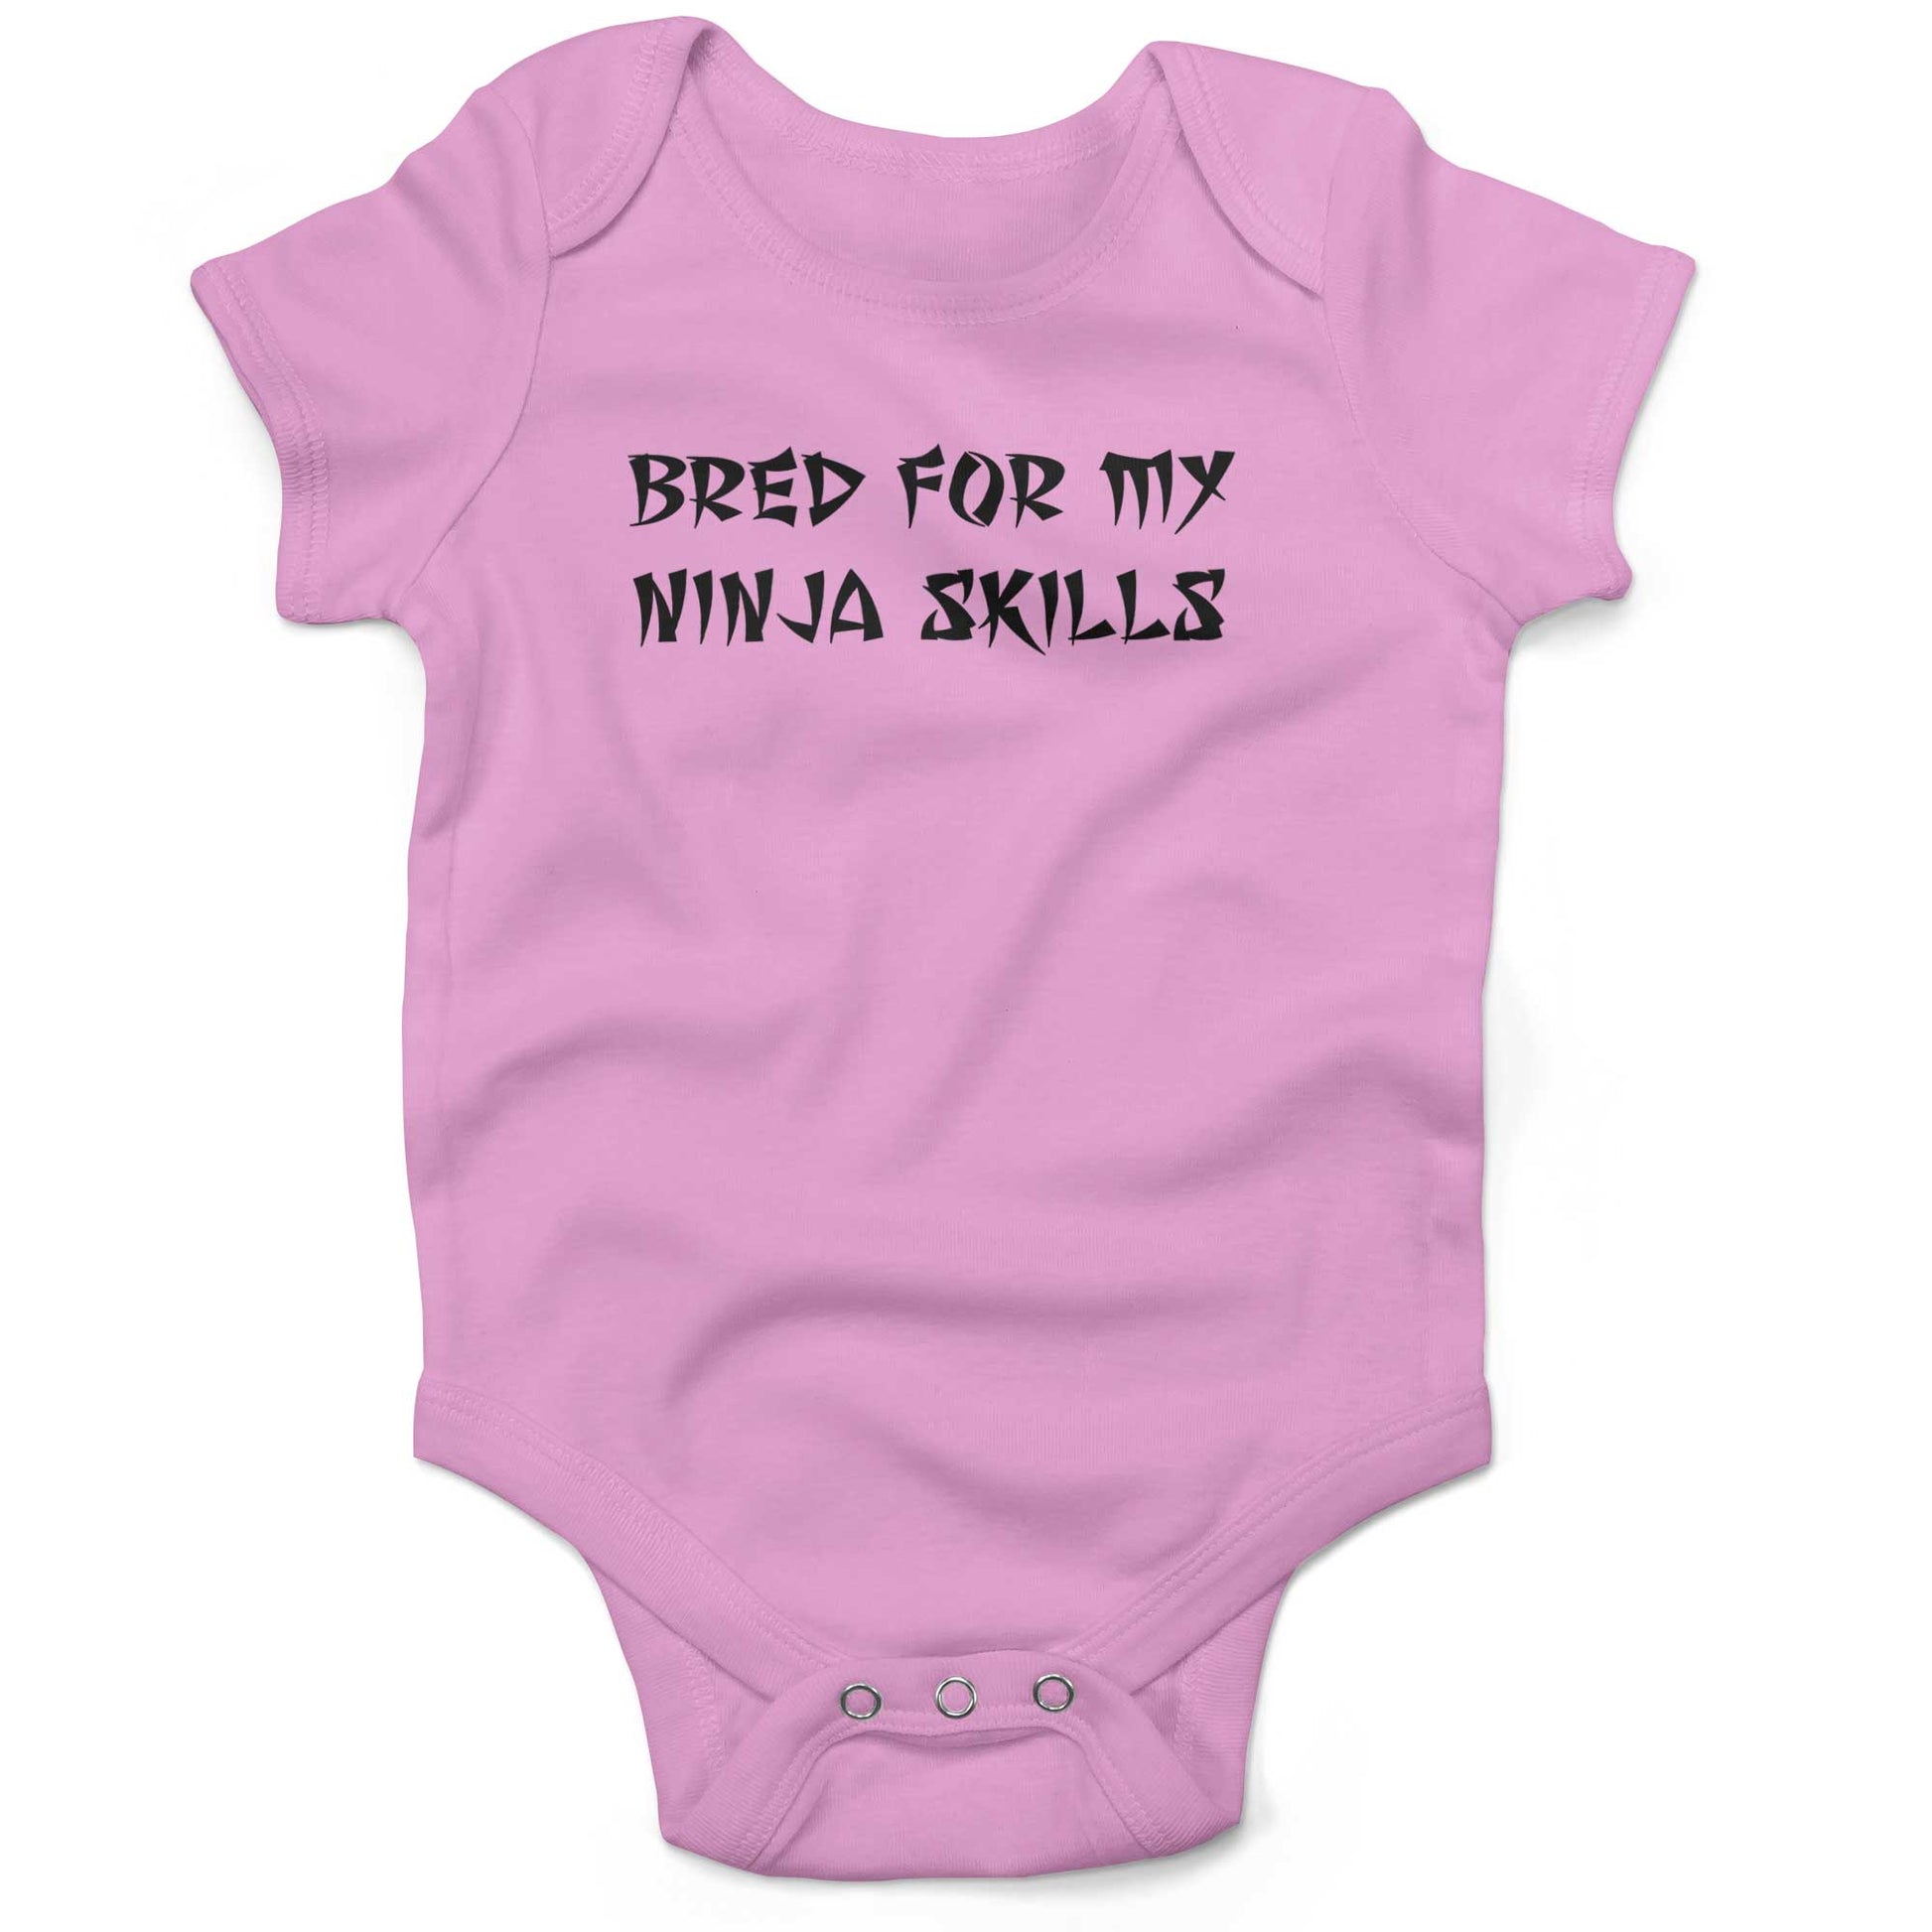 Bred For My Ninja Skills Infant Bodysuit or Raglan Baby Tee-Organic Pink-3-6 months